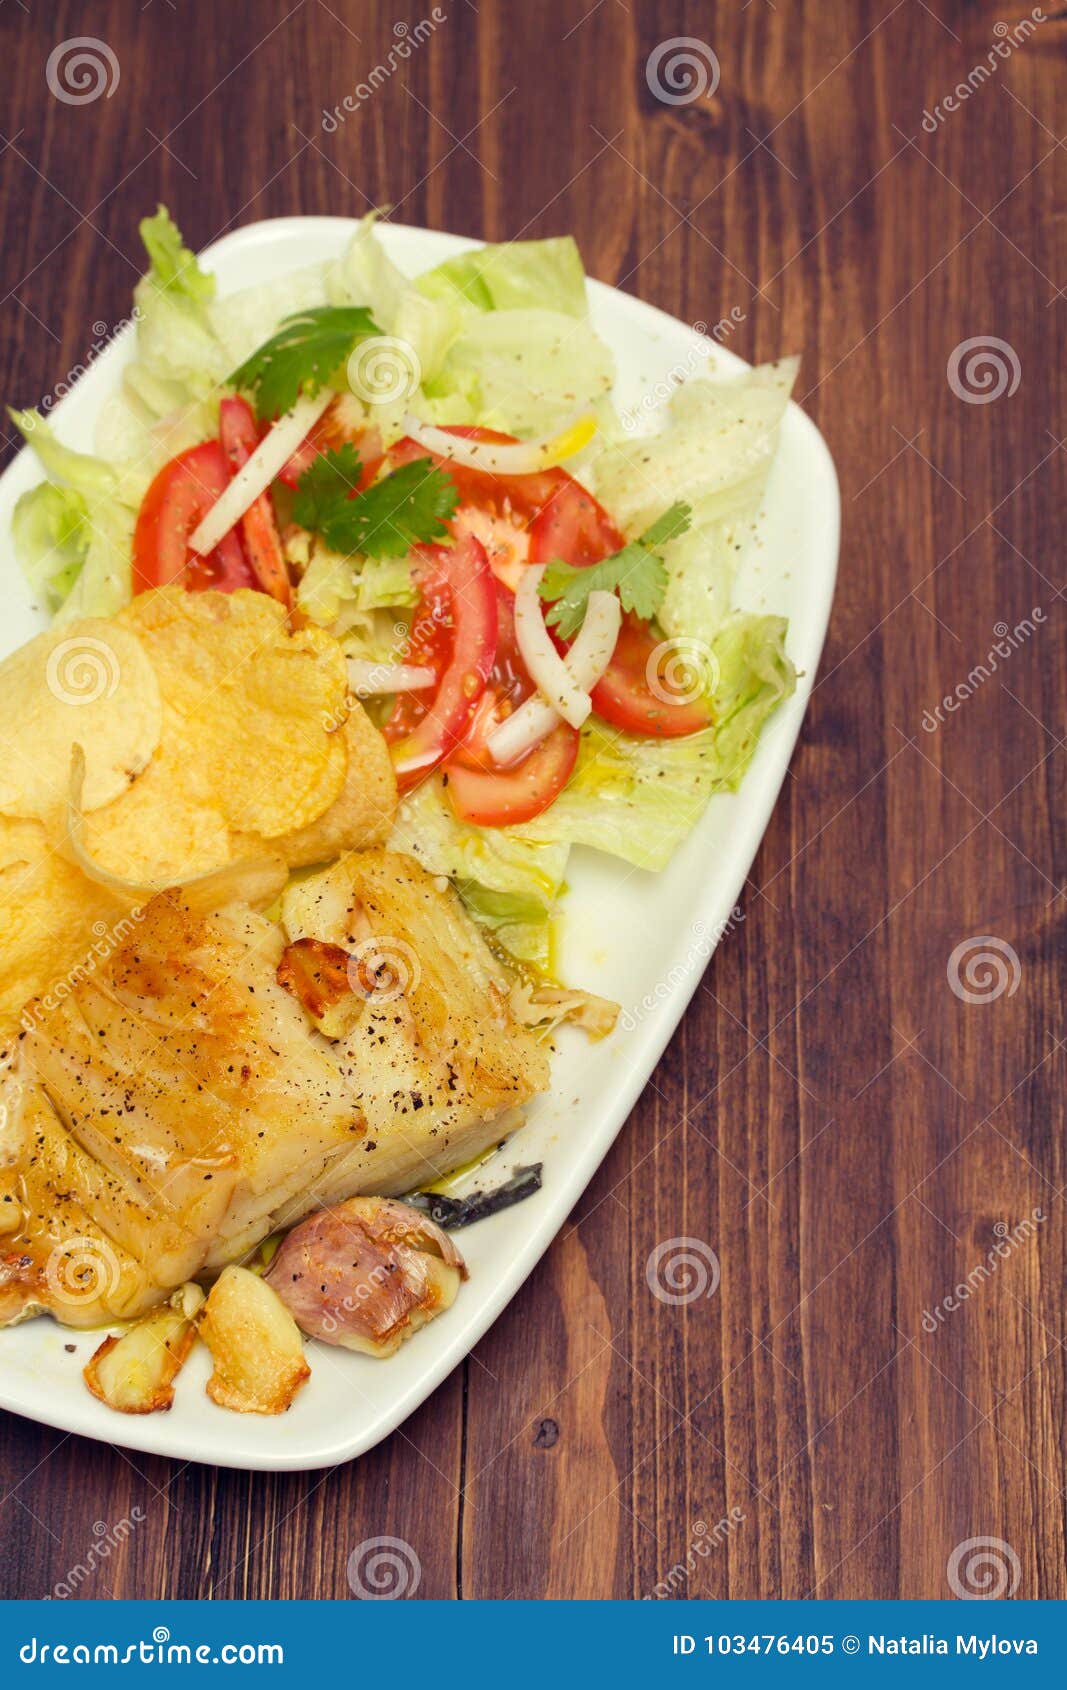 Fried Codfish with Potato and Salad on Dish Stock Image - Image of ...